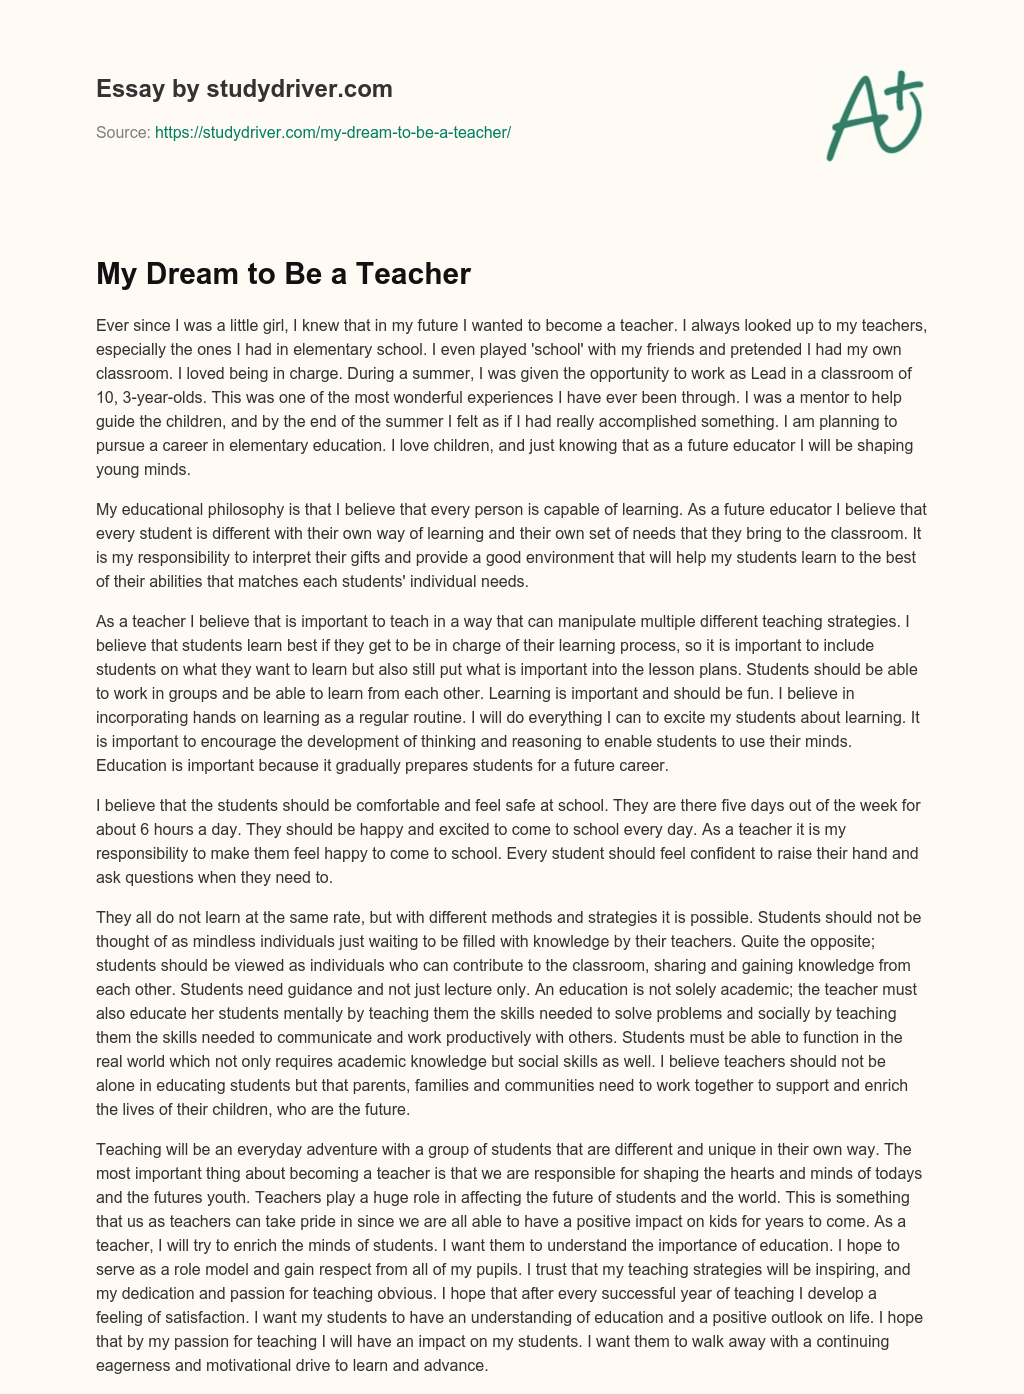 My Dream to be a Teacher essay